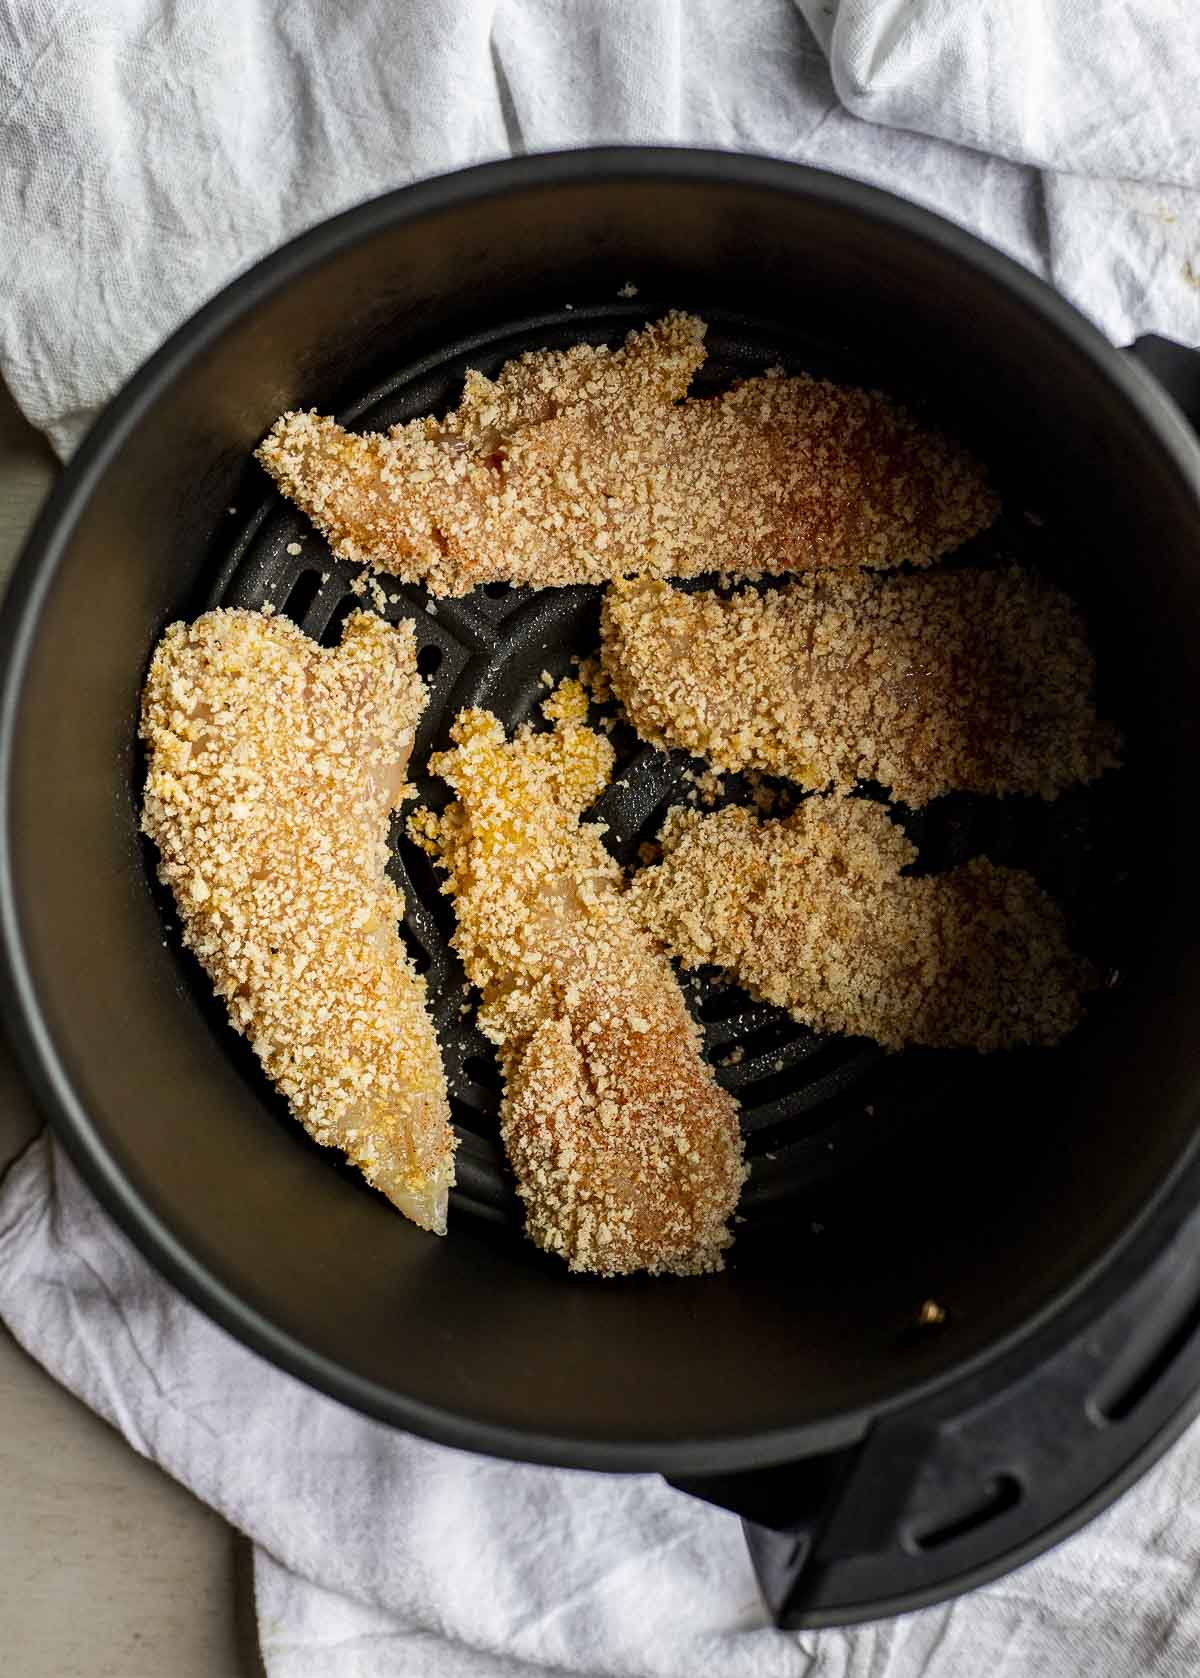 Breaded chicken tenders in an air fryer basket.